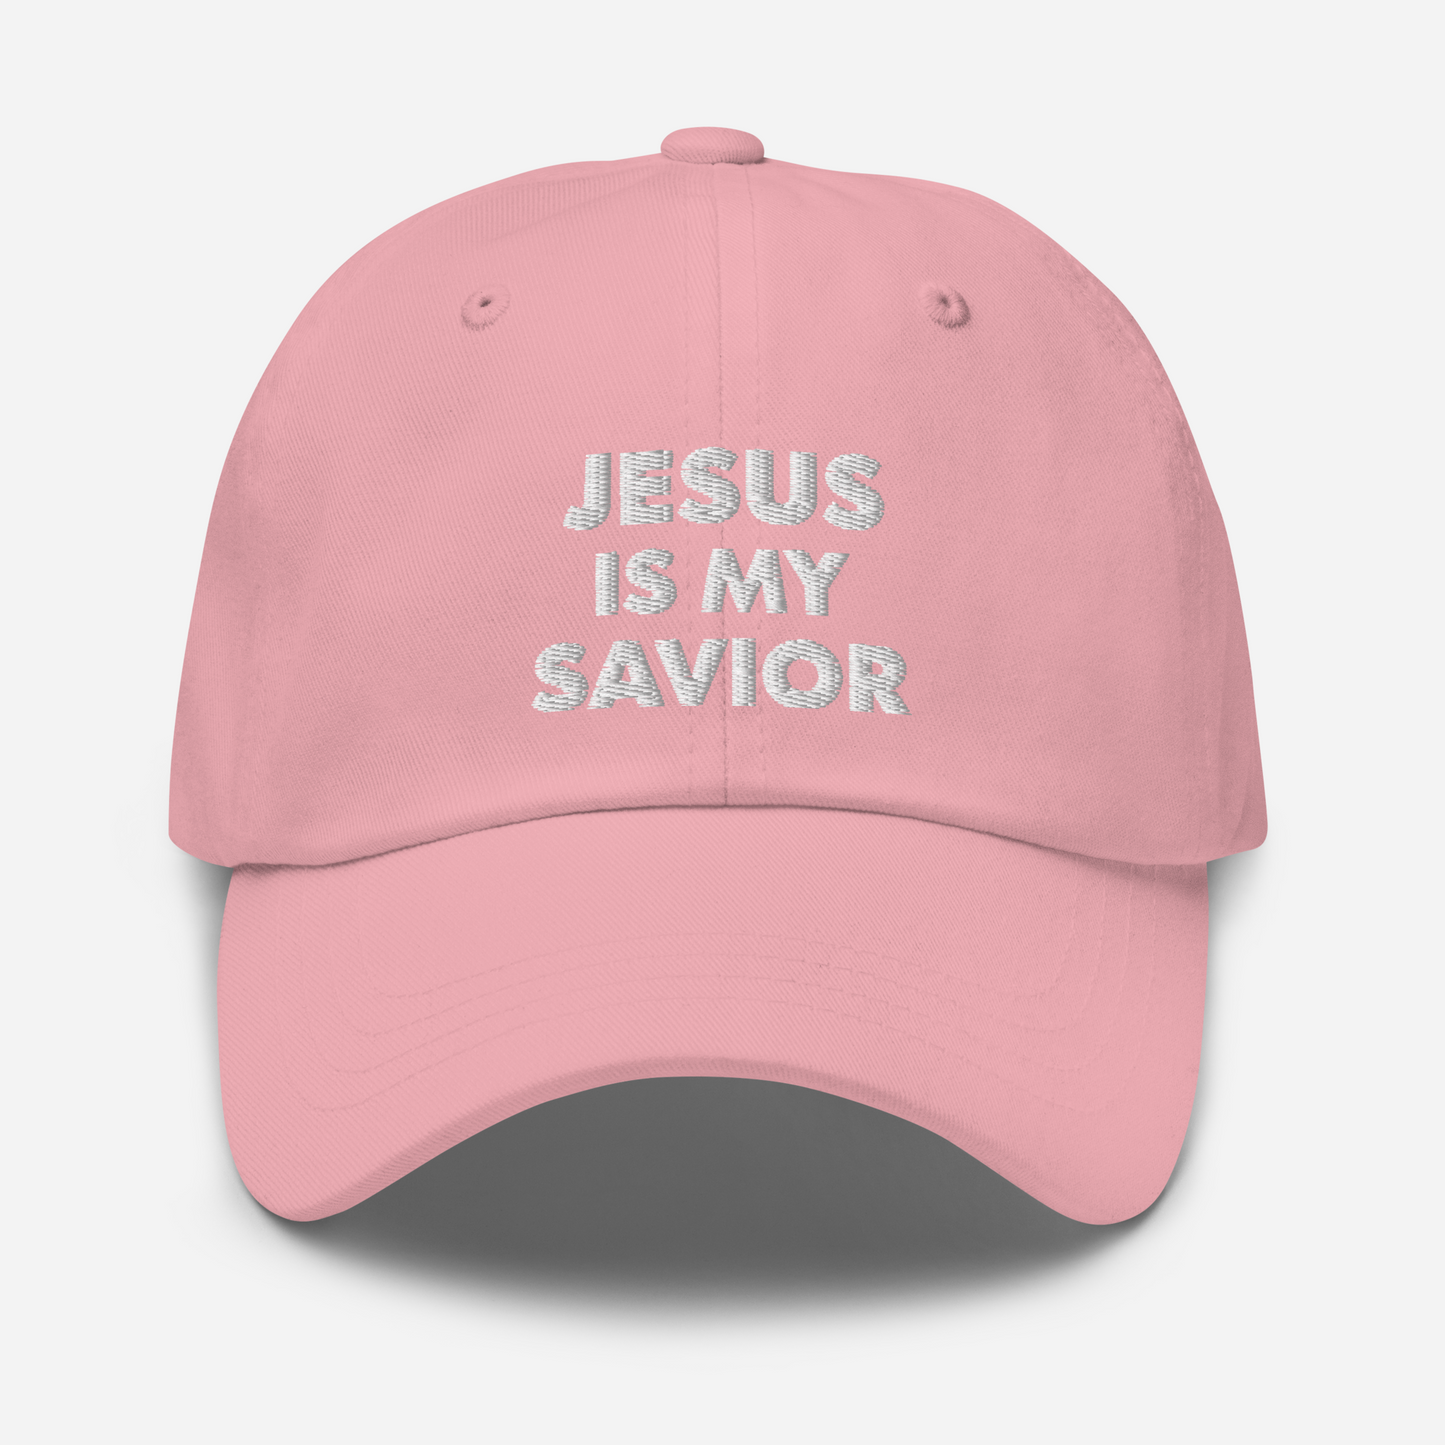 Jesus is my Savior - Dad hat